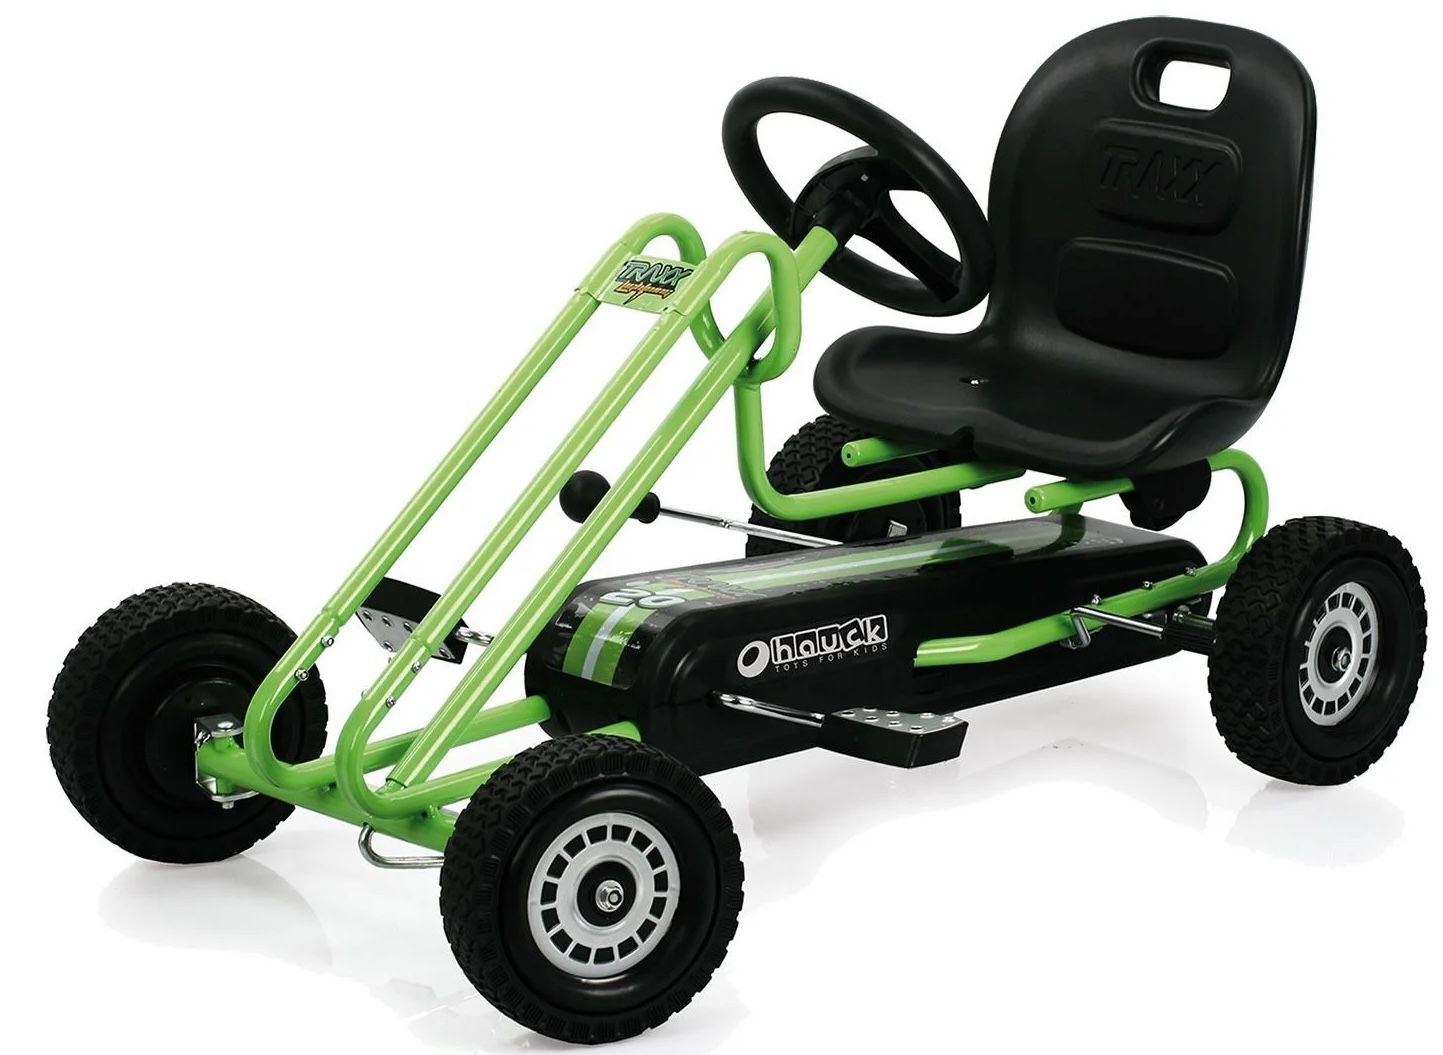 Hauck Toys Traxx Lightning Go Kart für 74,99€ (statt 108€)